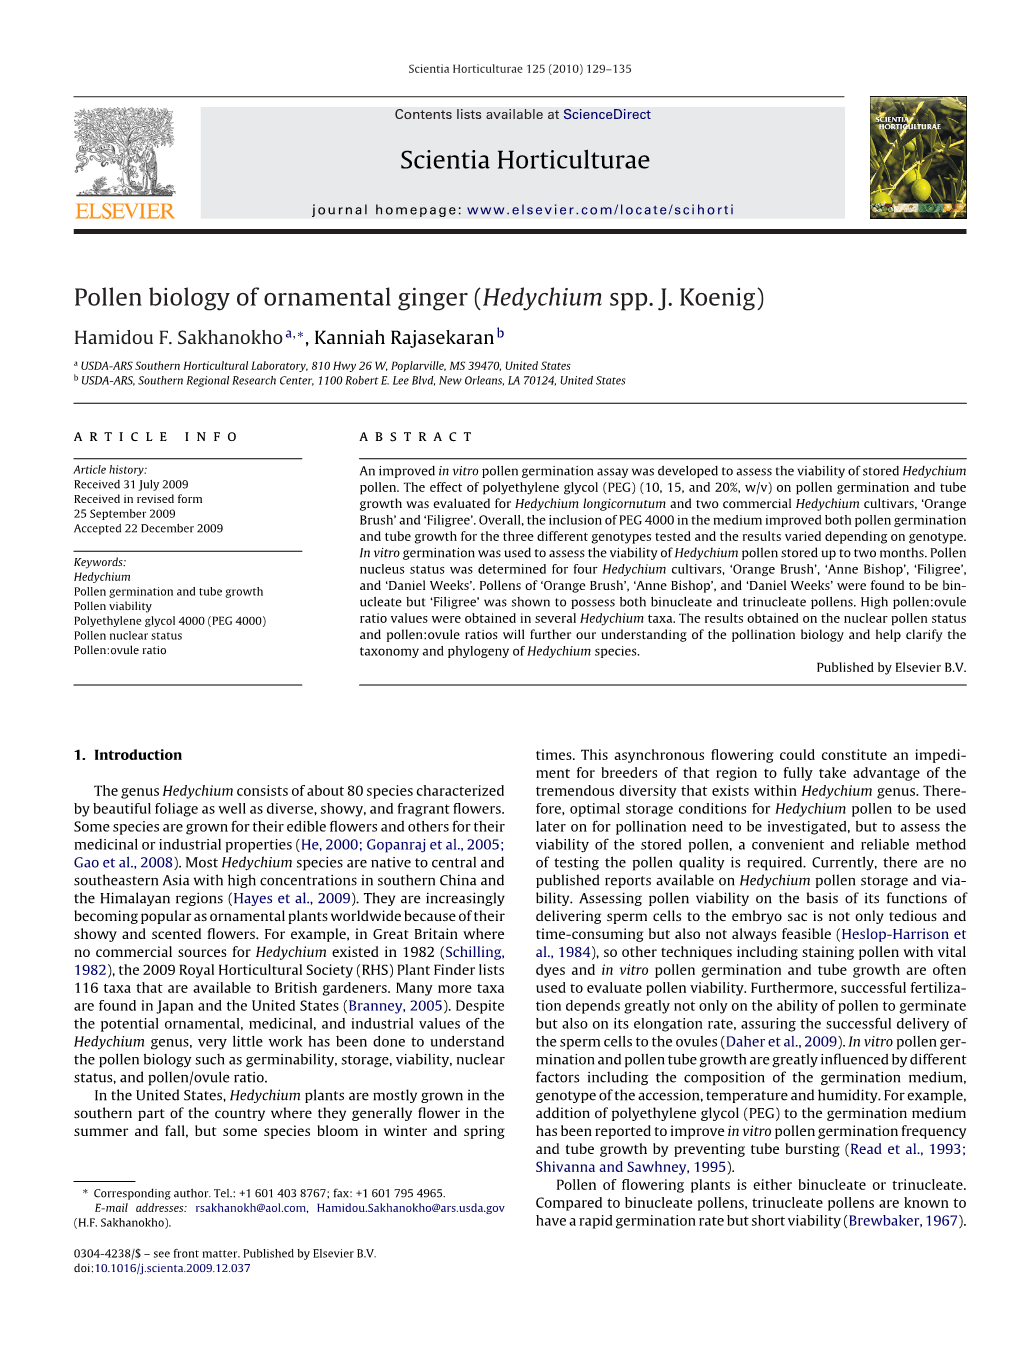 Pollen Biology of Ornamental Ginger (Hedychium Spp. J. Koenig)